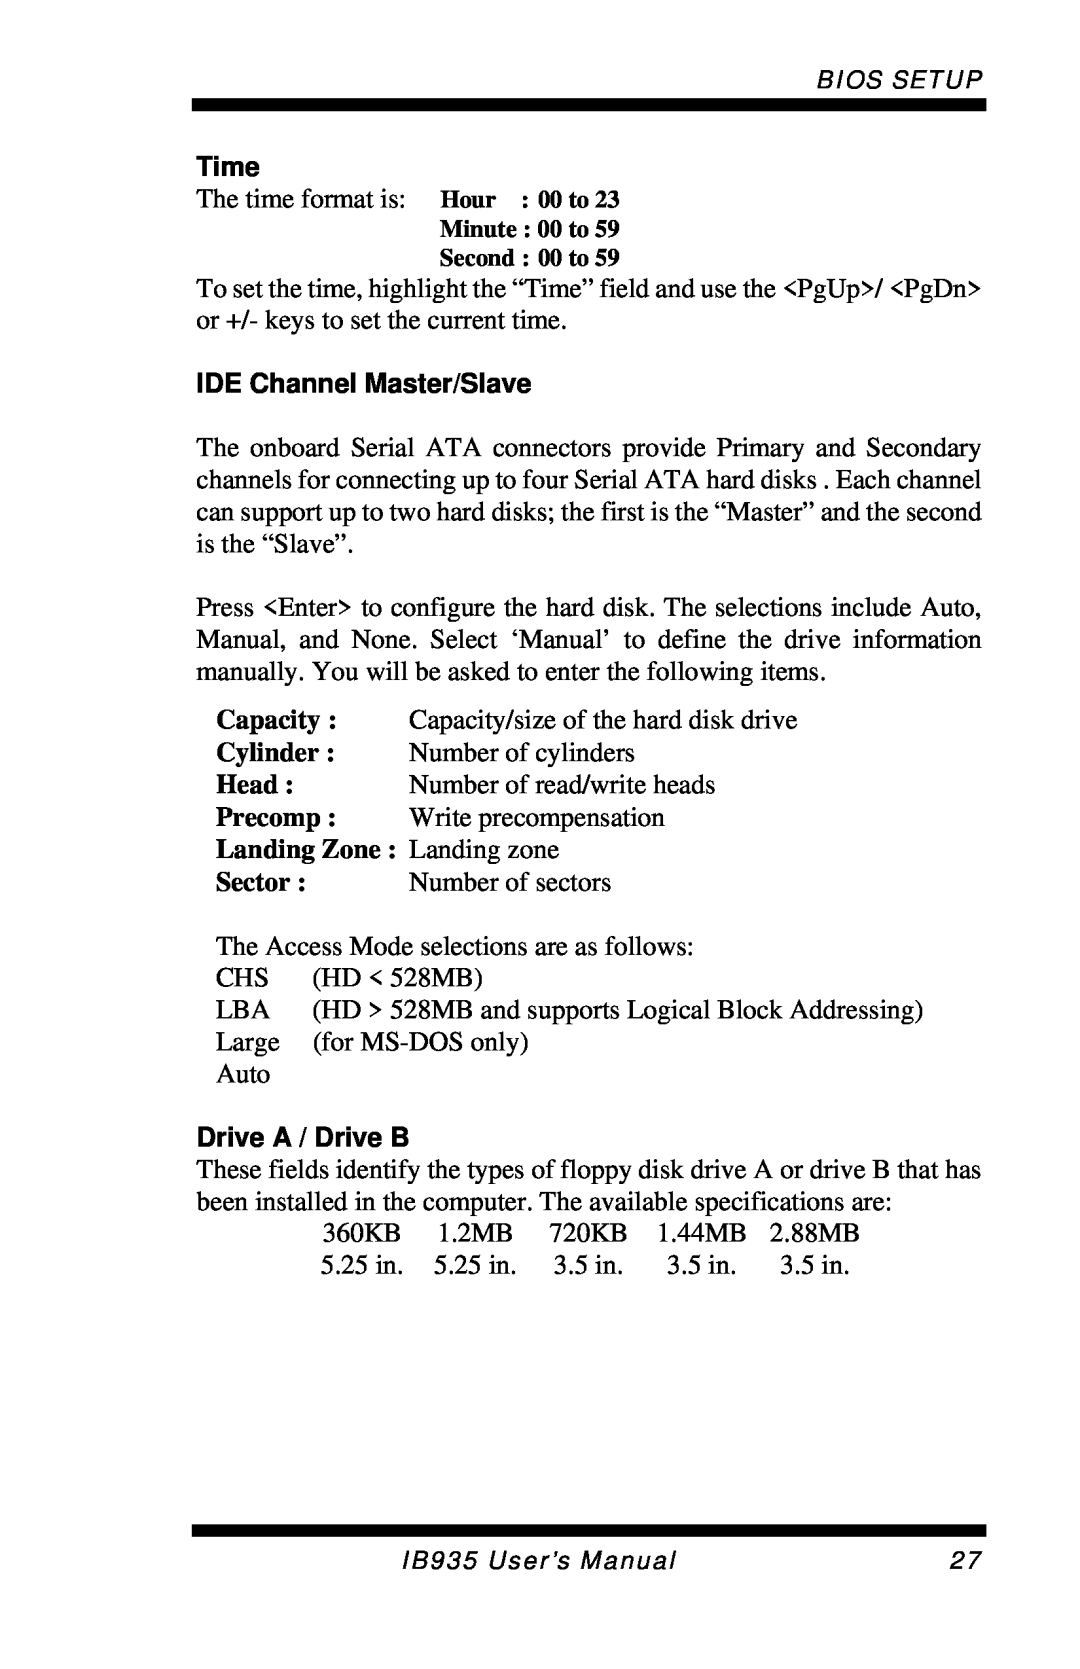 Intel IB935 user manual Time, IDE Channel Master/Slave, Drive A / Drive B, Landing Zone Landing zone 